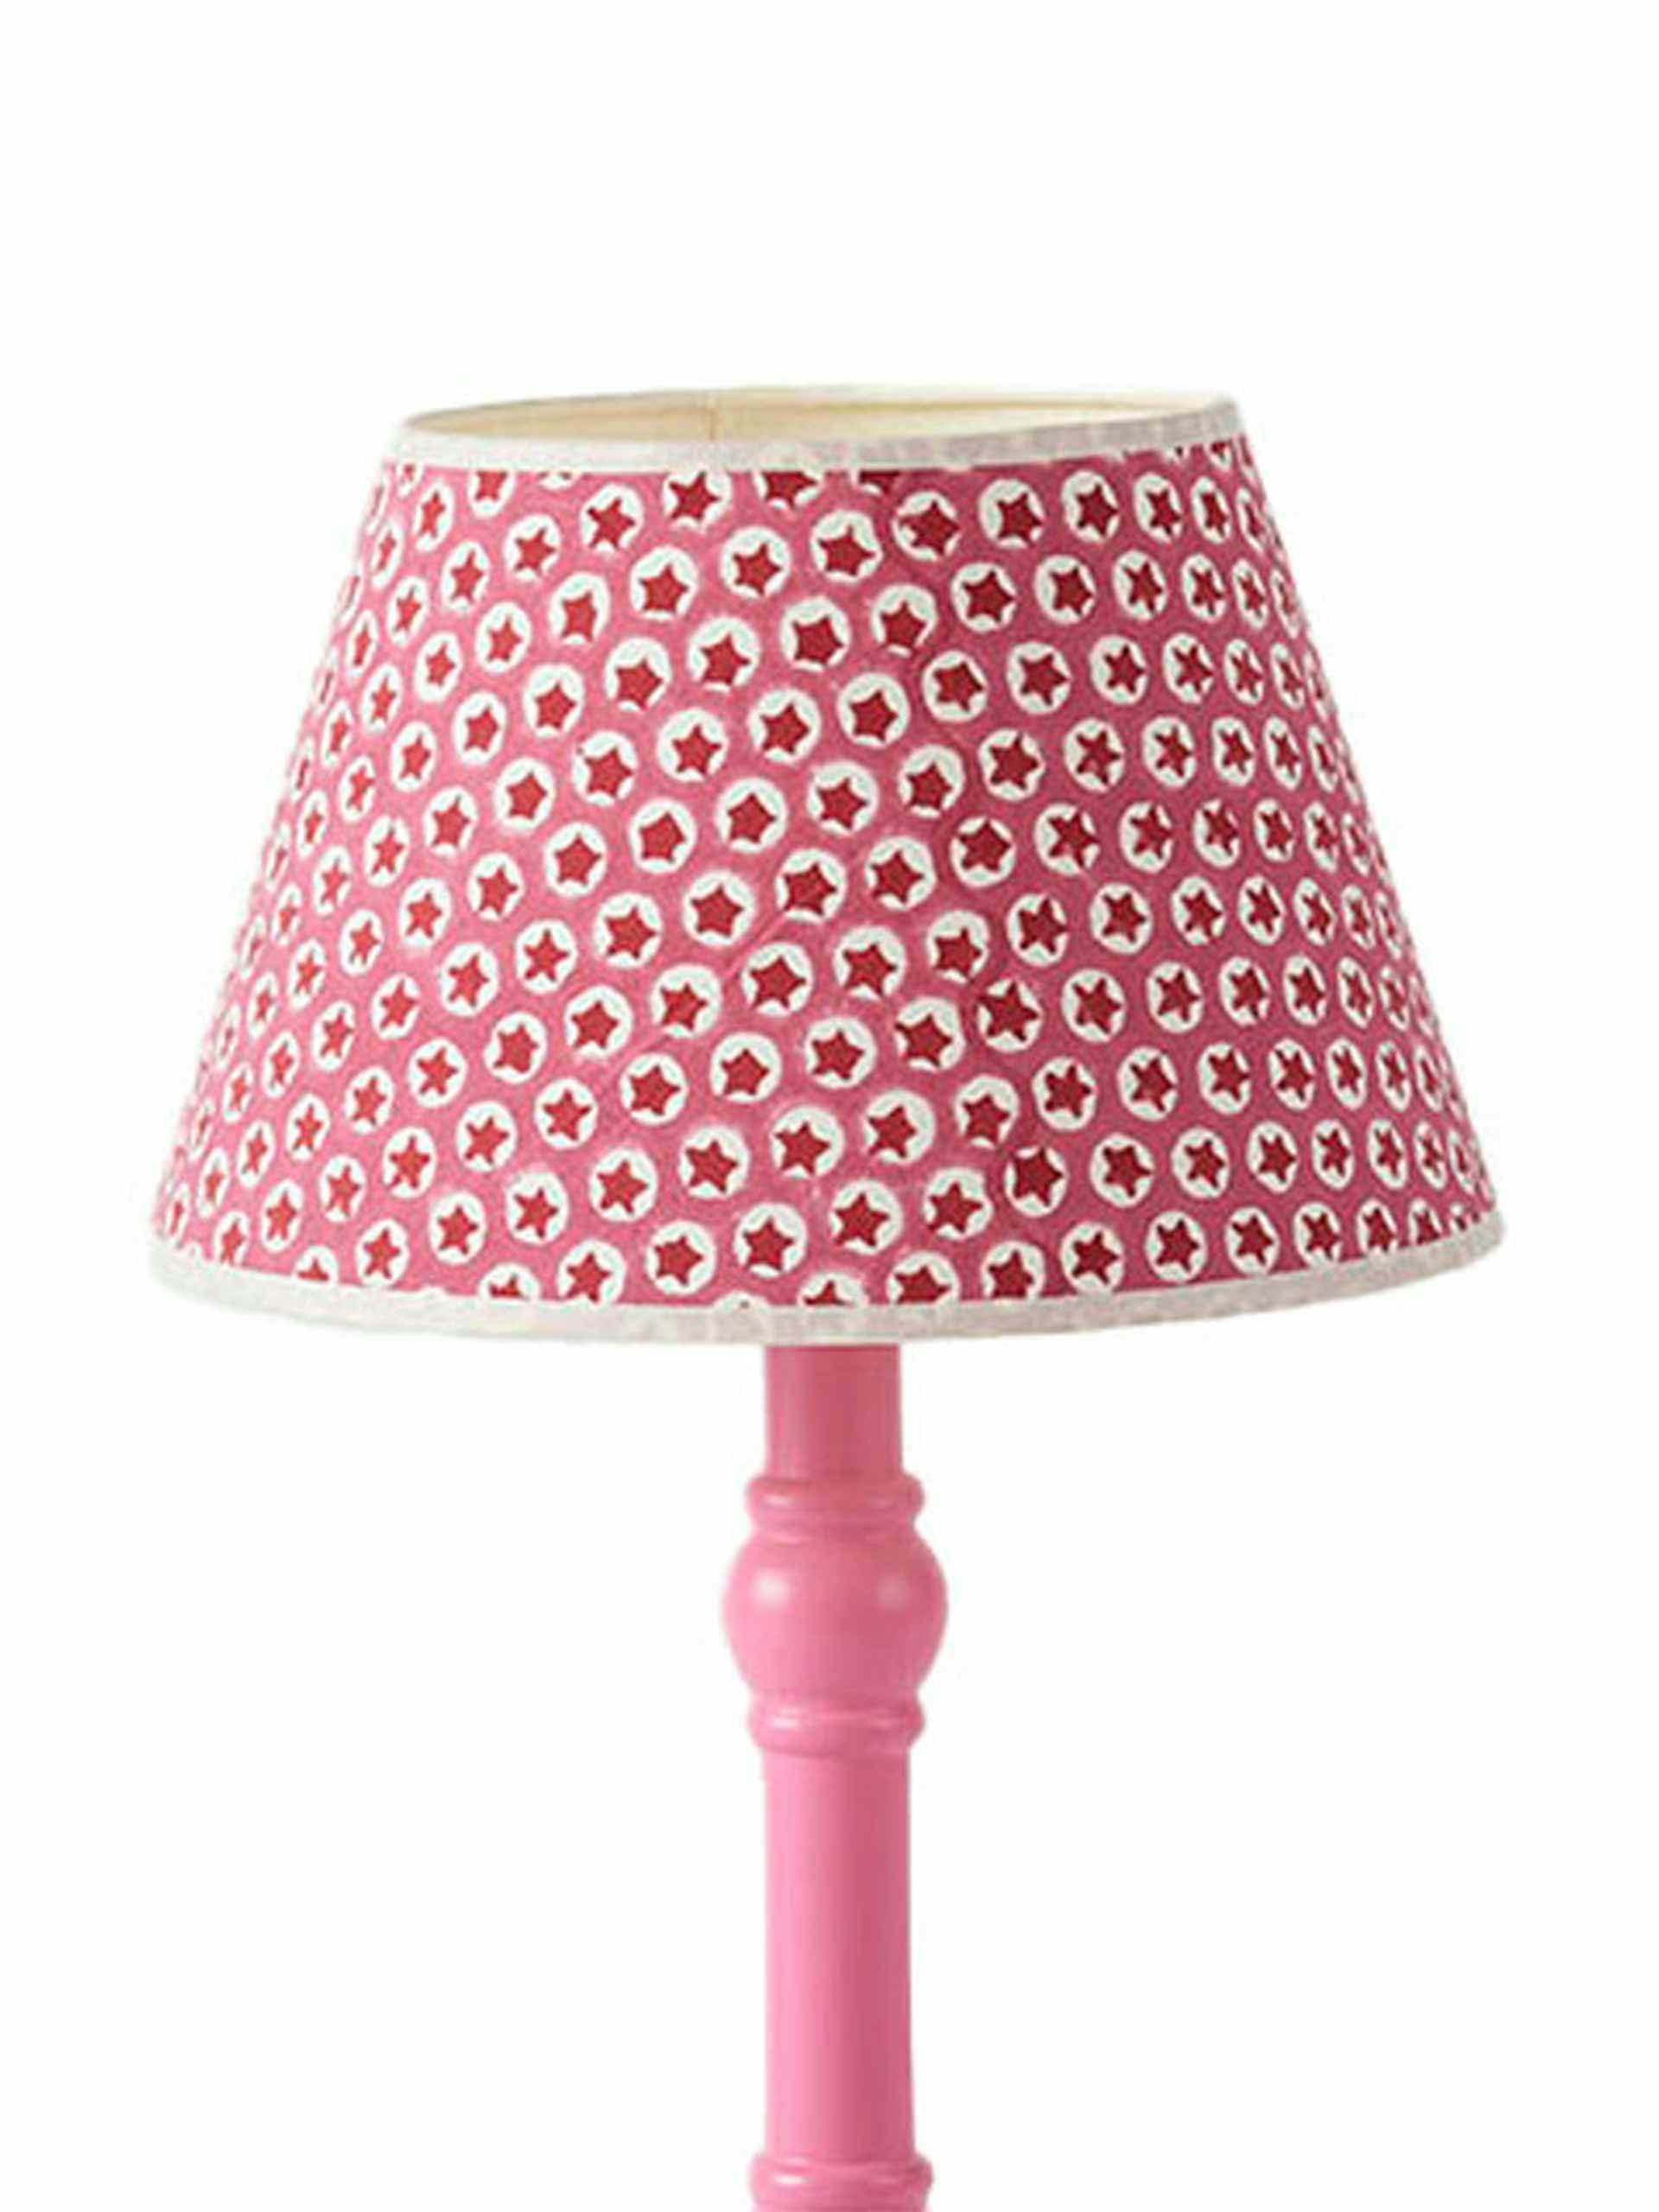 Small pink Elegant Empire lampshade